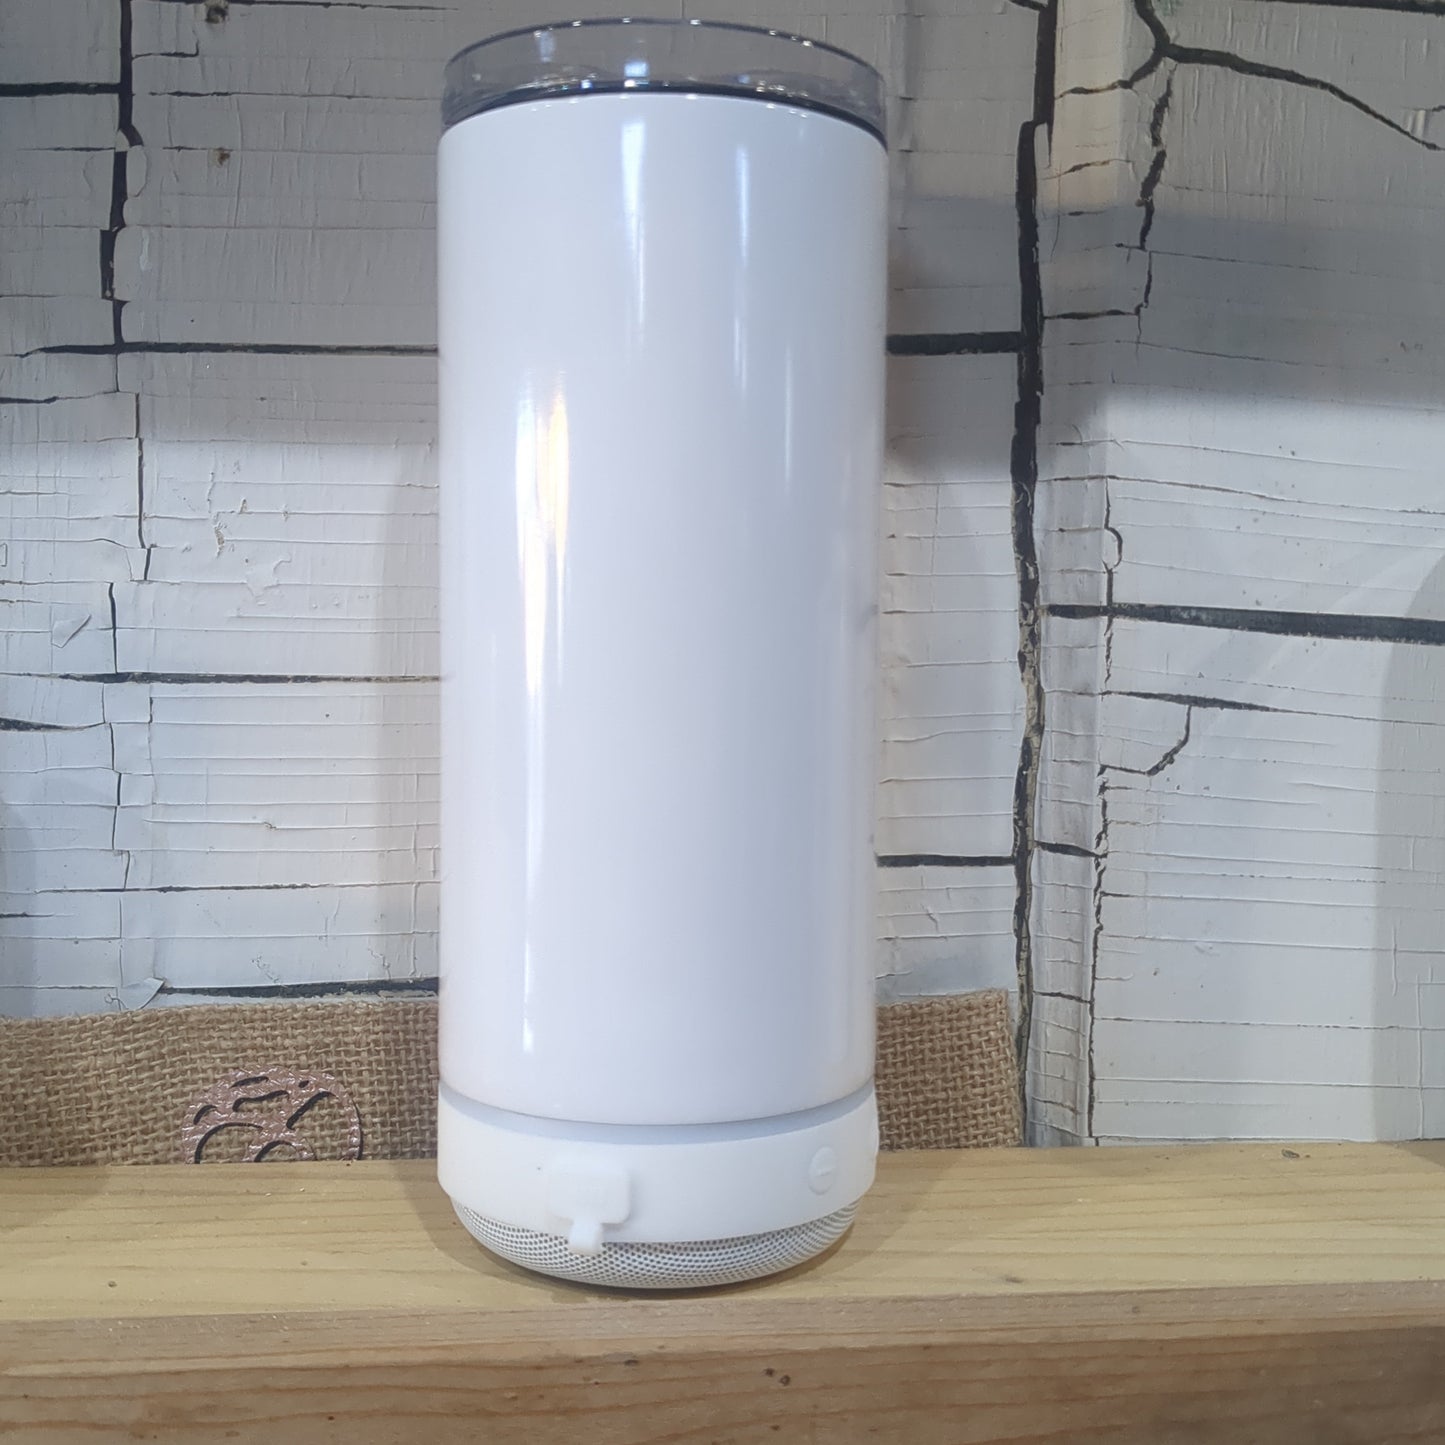 17oz speaker stainless steel tumbler and can cooler with white speaker for custom orders